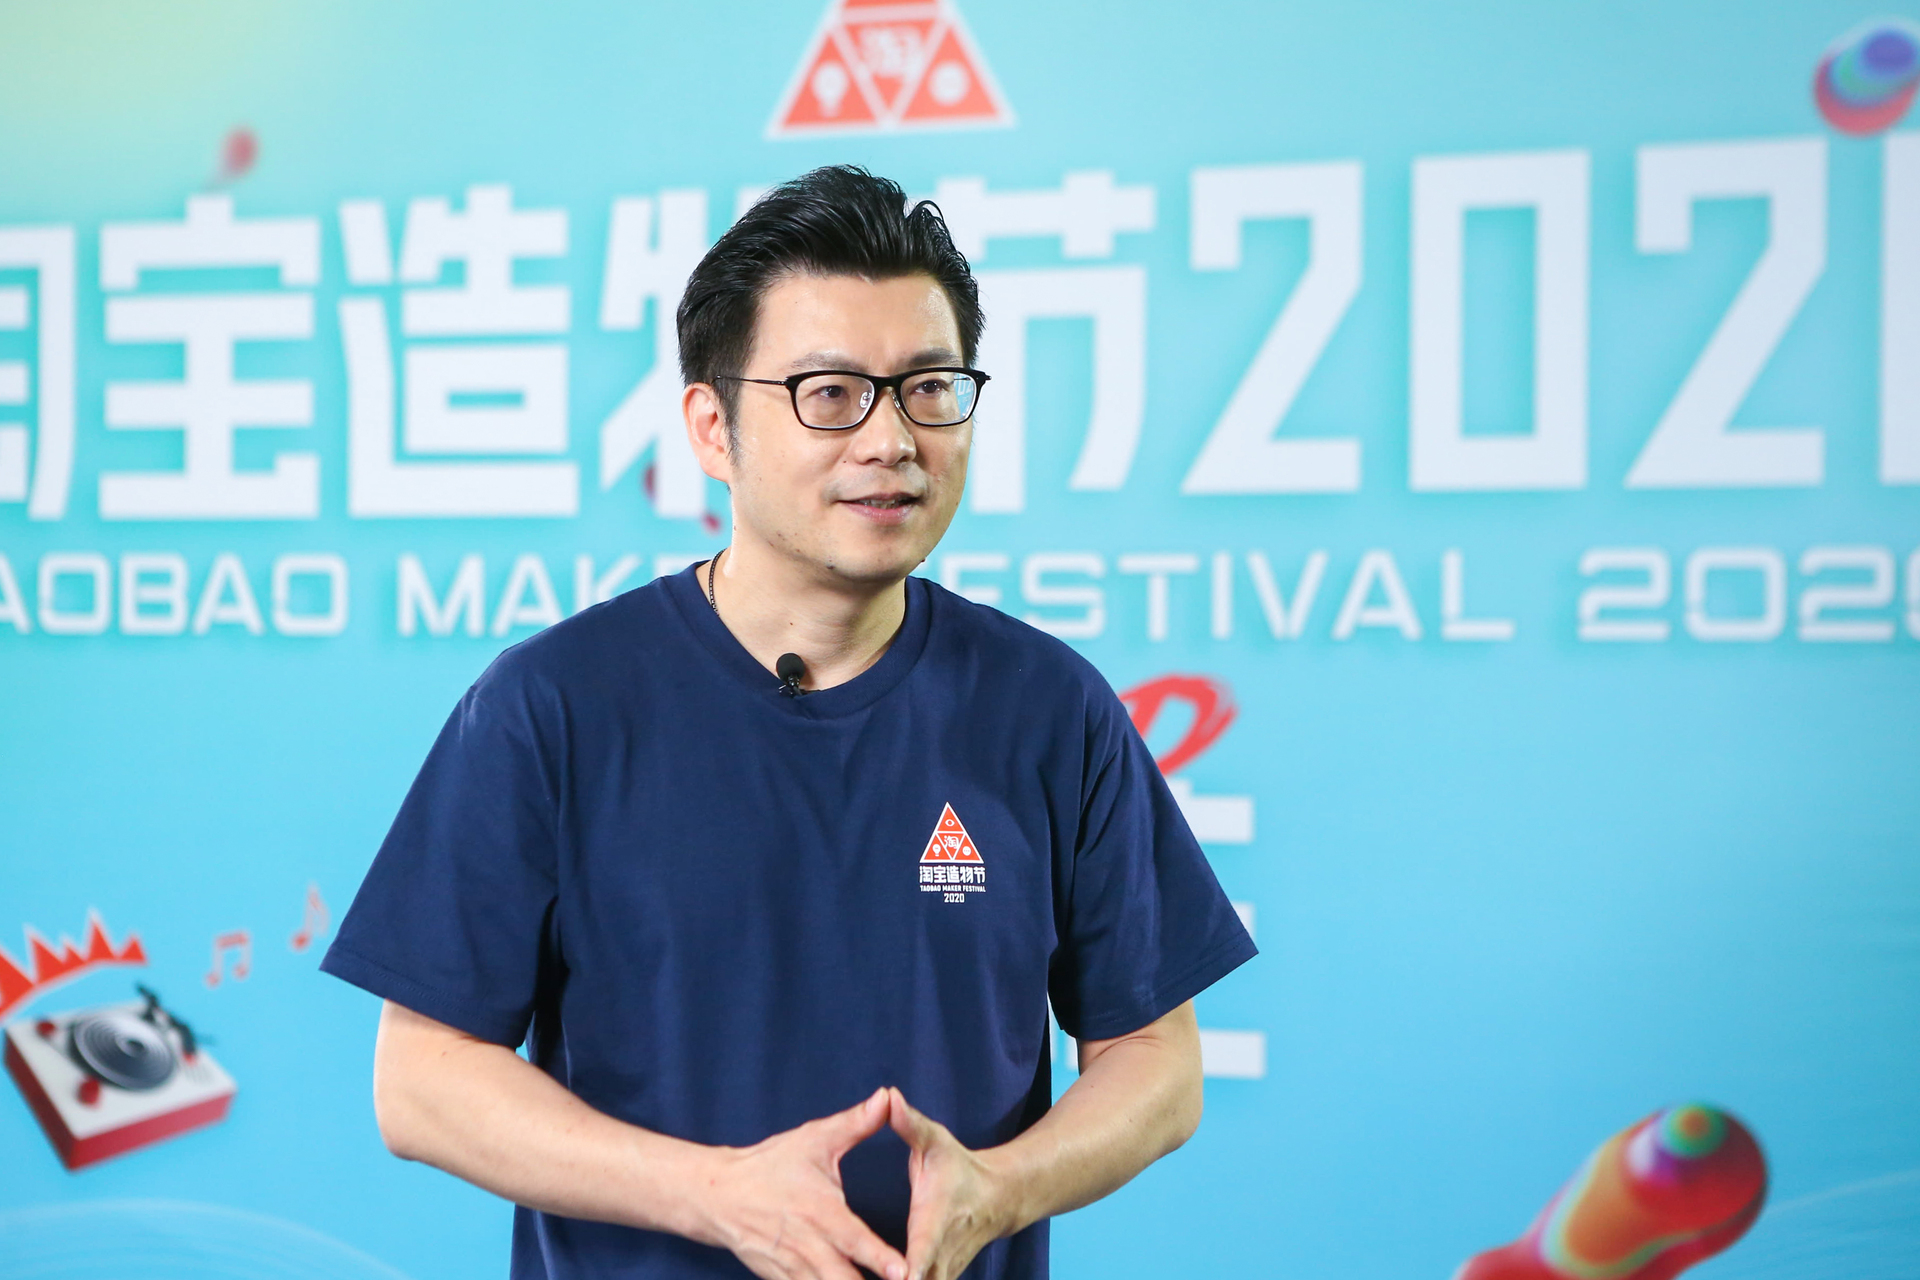 Chris Tung on Taobao Maker Festival Kick OFf